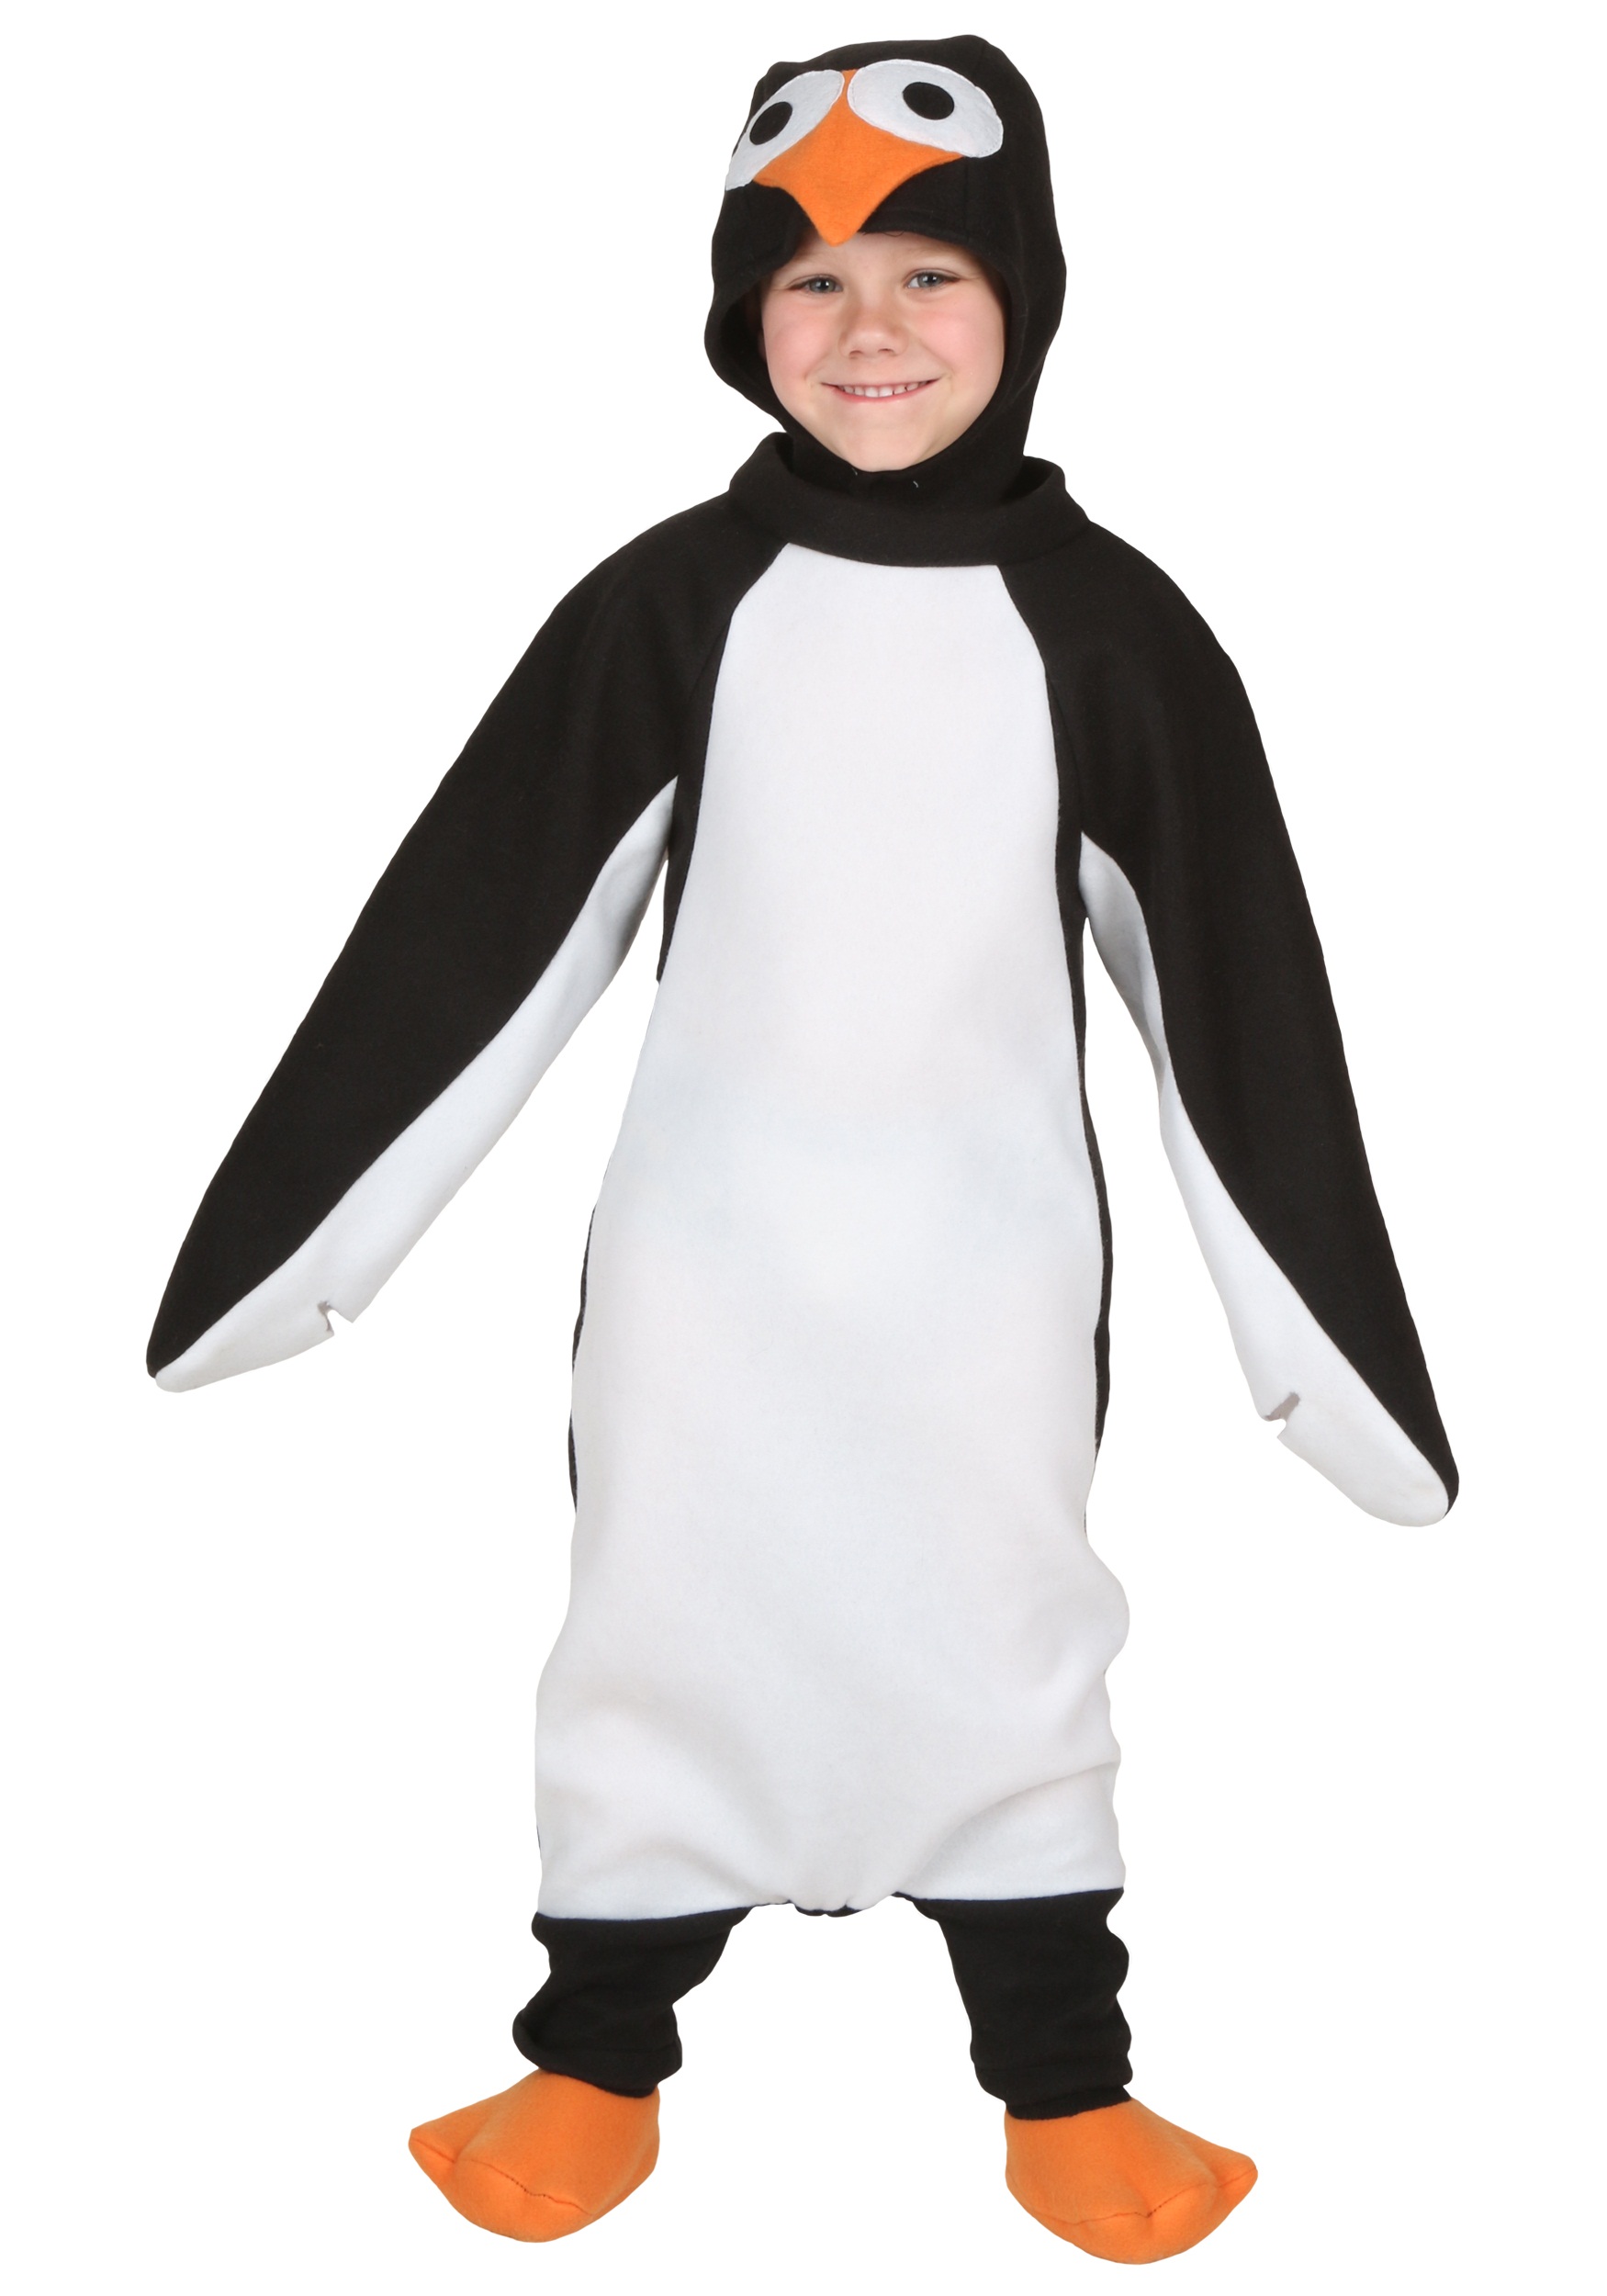 Photos - Fancy Dress Toddler FUN Costumes Penguin Costume for Toddlers Black/Orange/White FUN21 